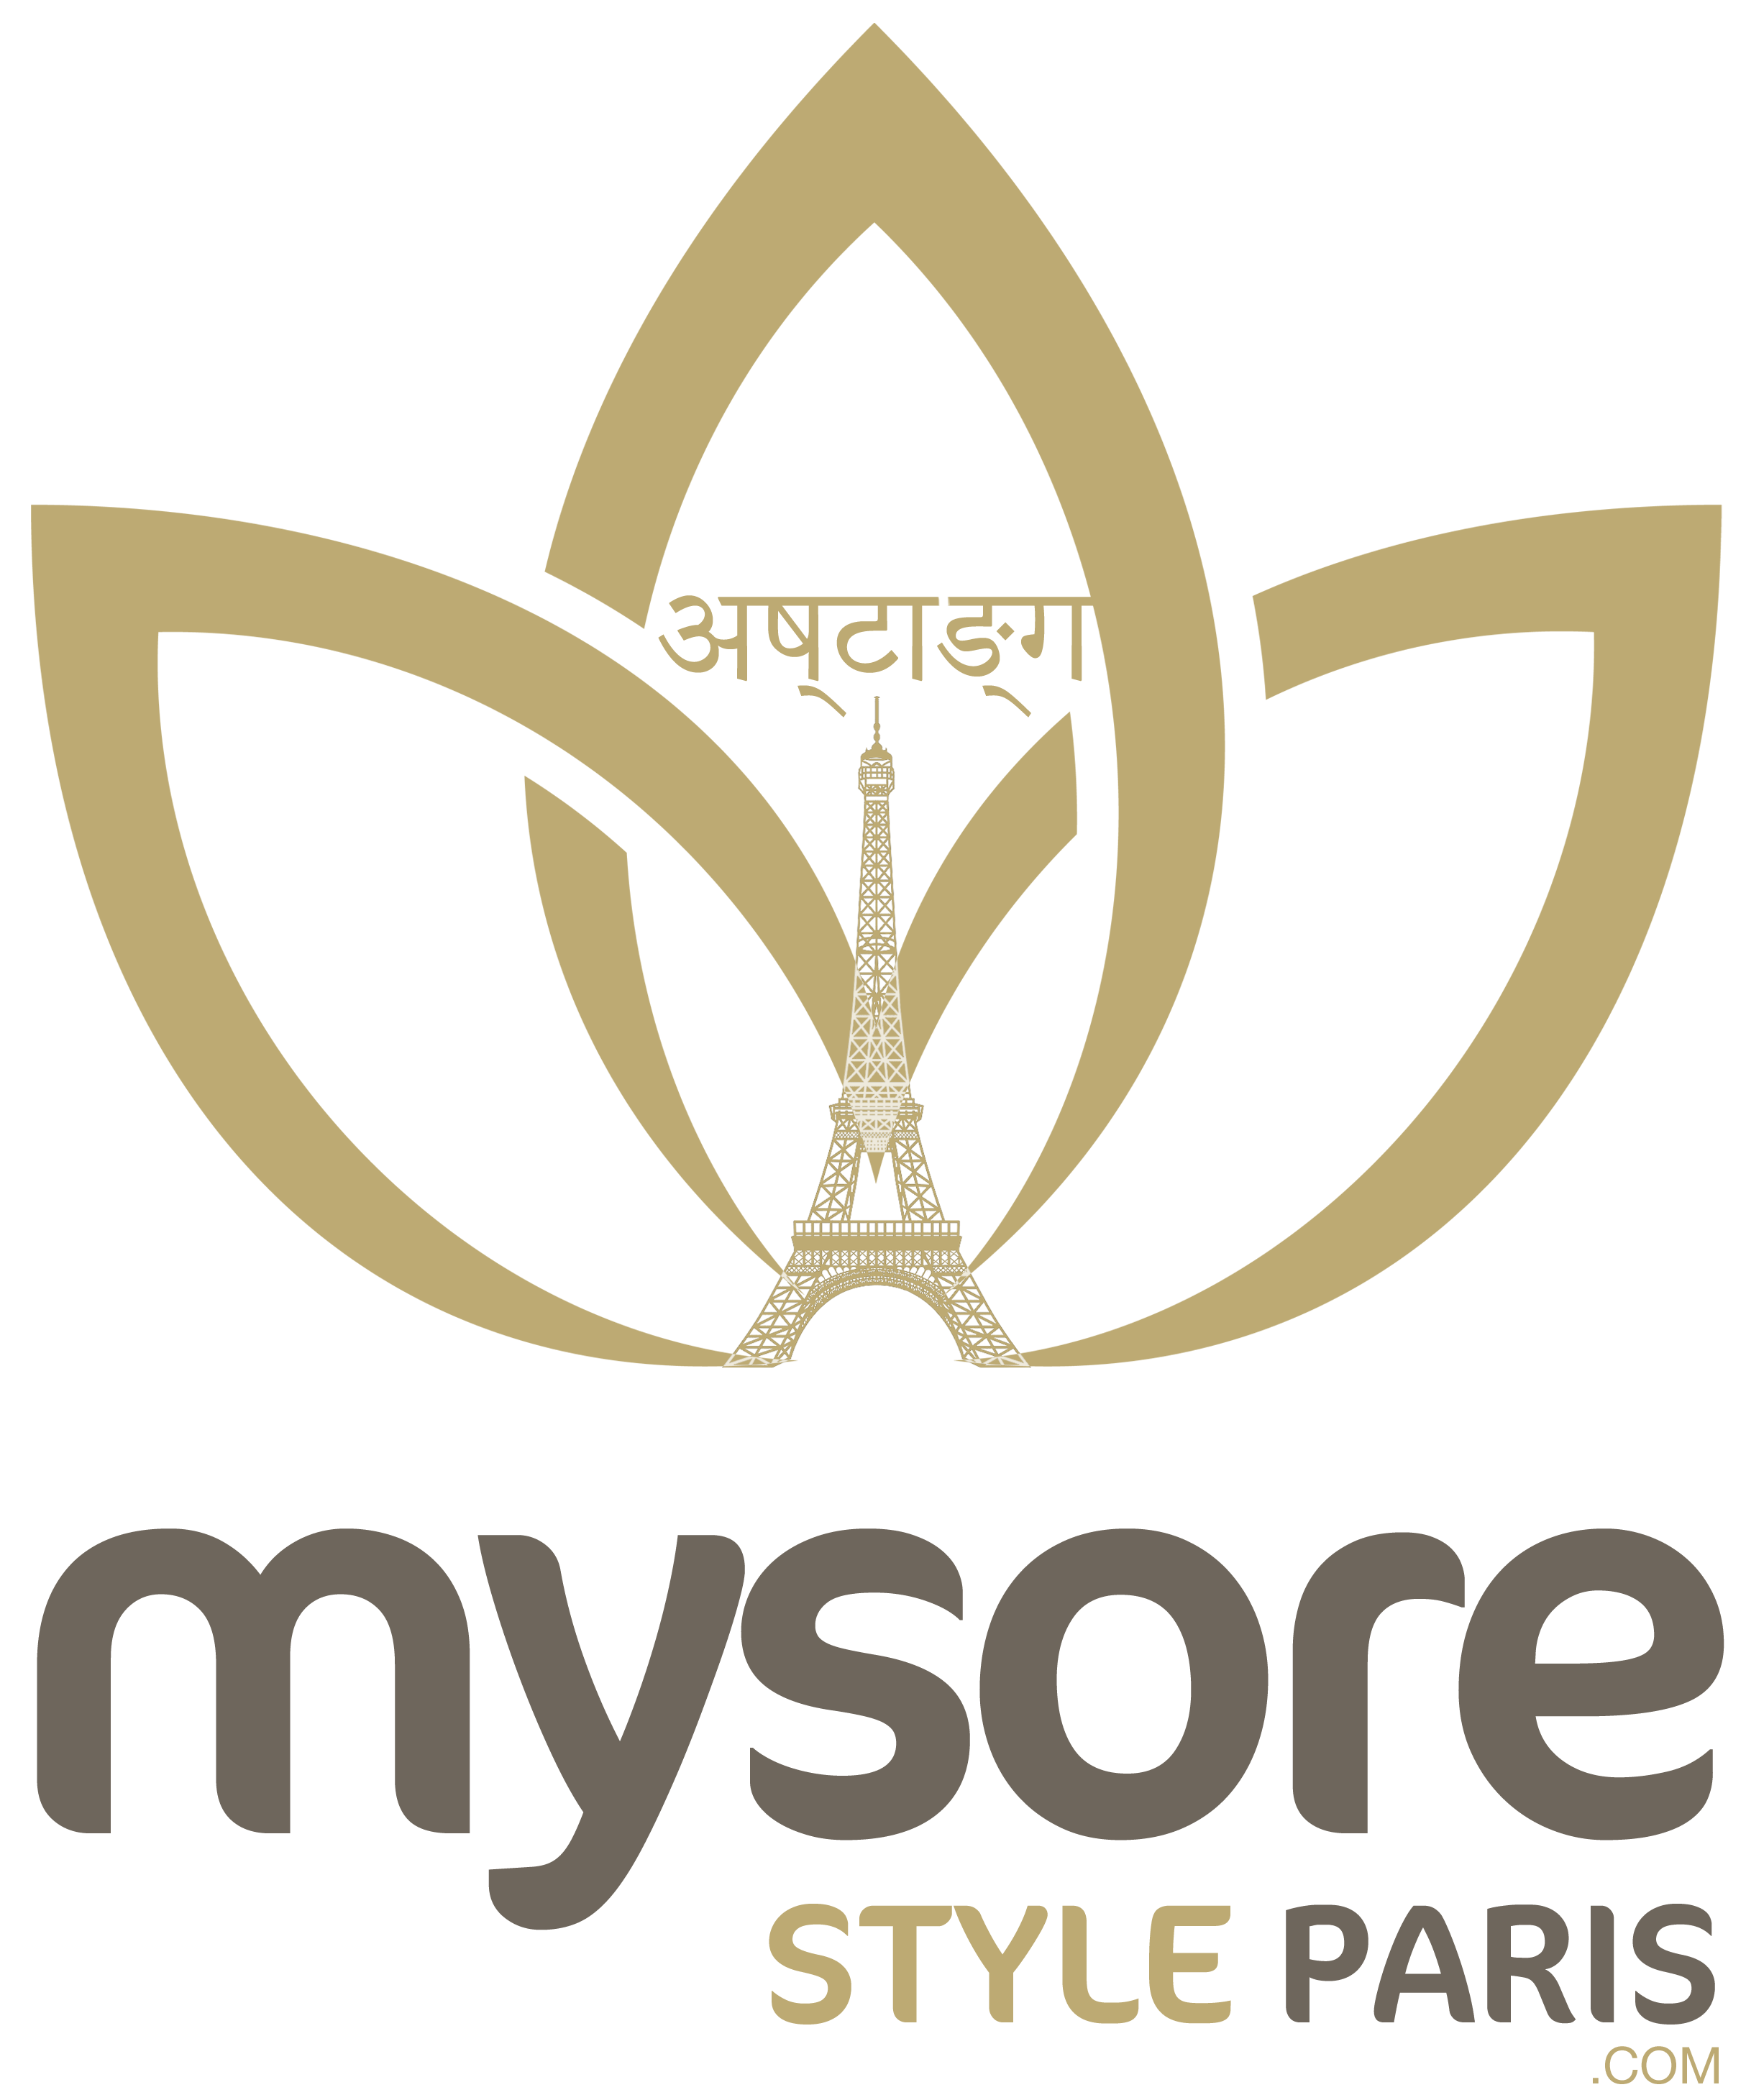 Mysore Style Paris, Ashtanga Yoga